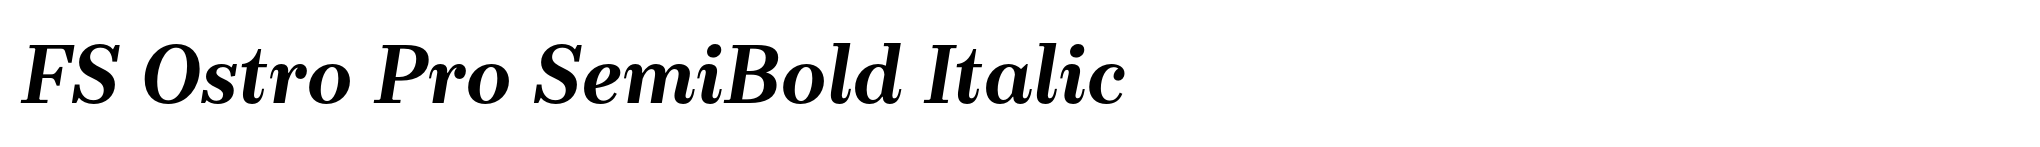 FS Ostro Pro SemiBold Italic image